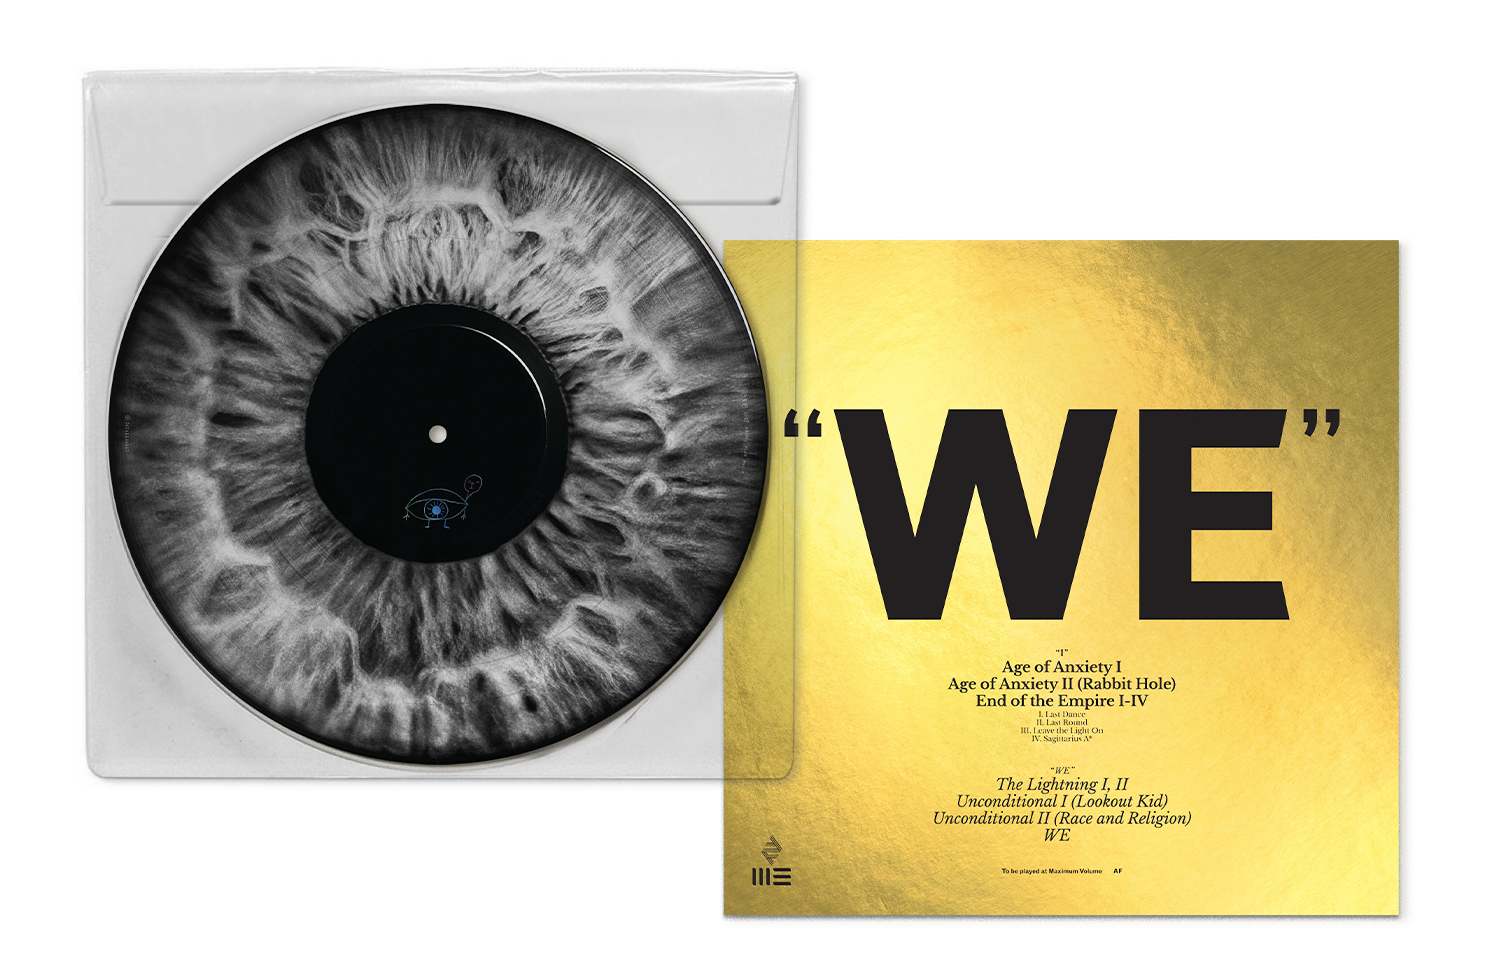 Arcade Fire We picture disc of an human eye iris